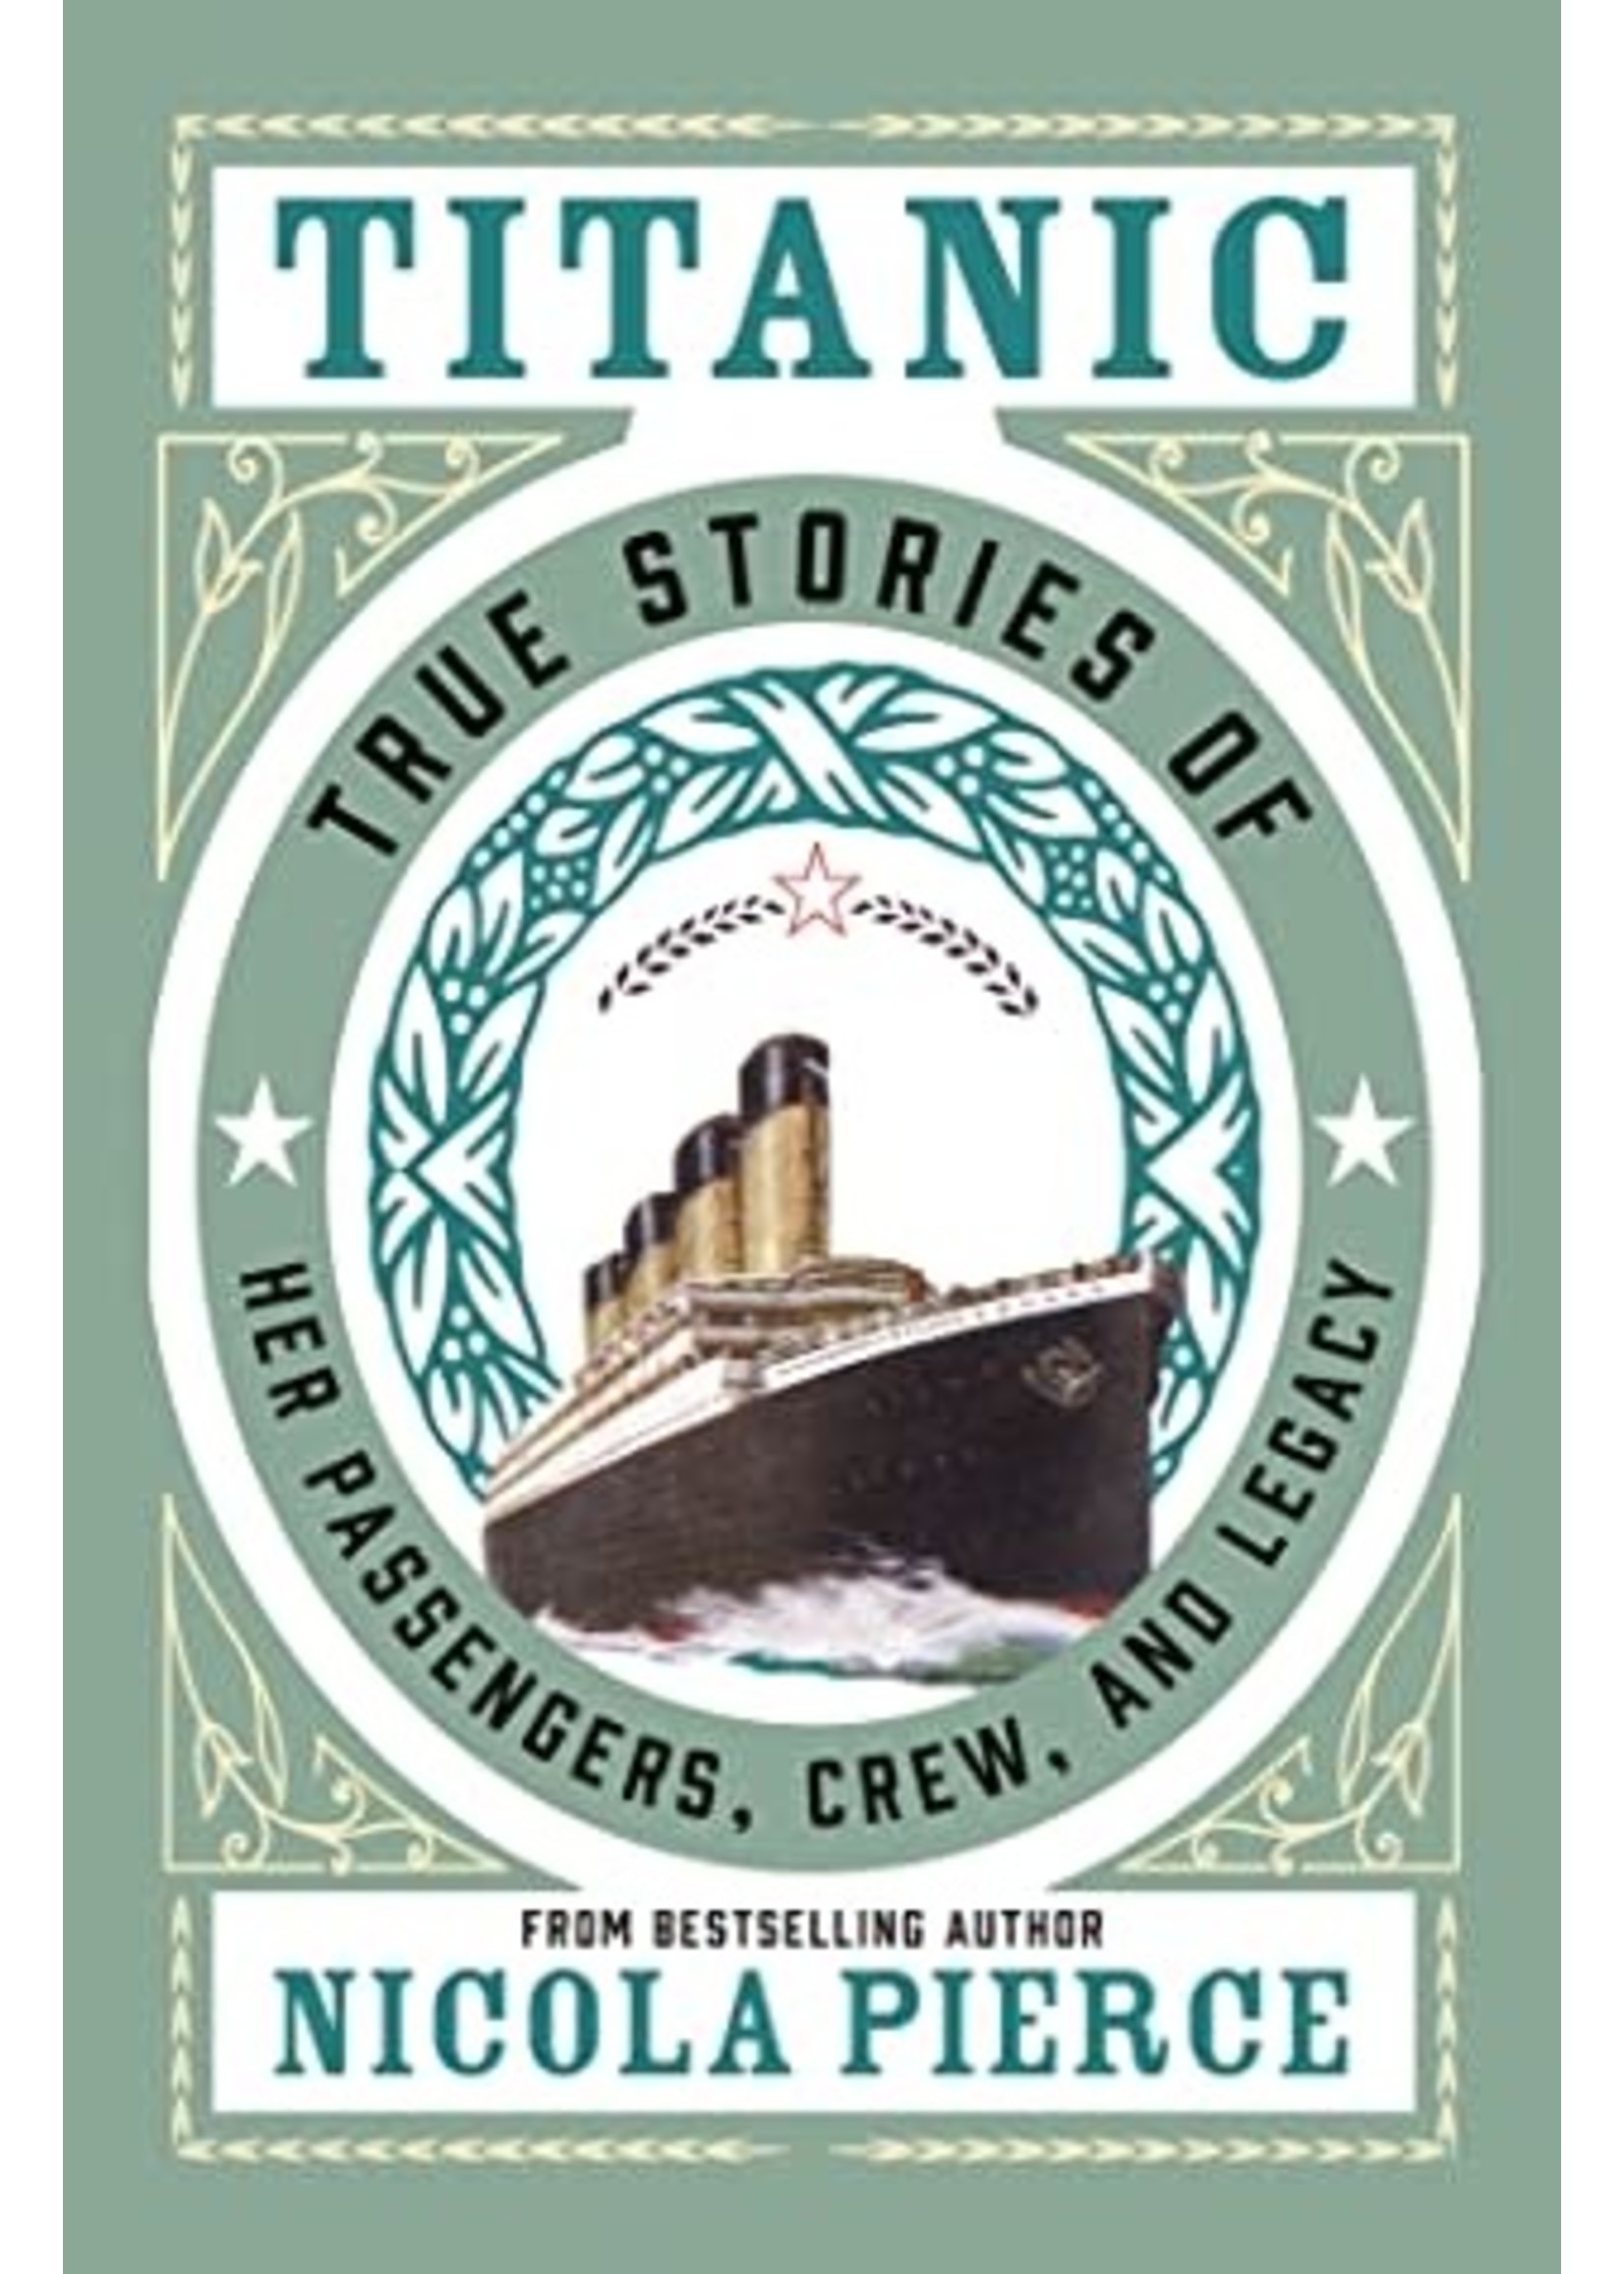 Titanic: True Stories of her Passengers, Crew and Legacy by Nicola Pierce